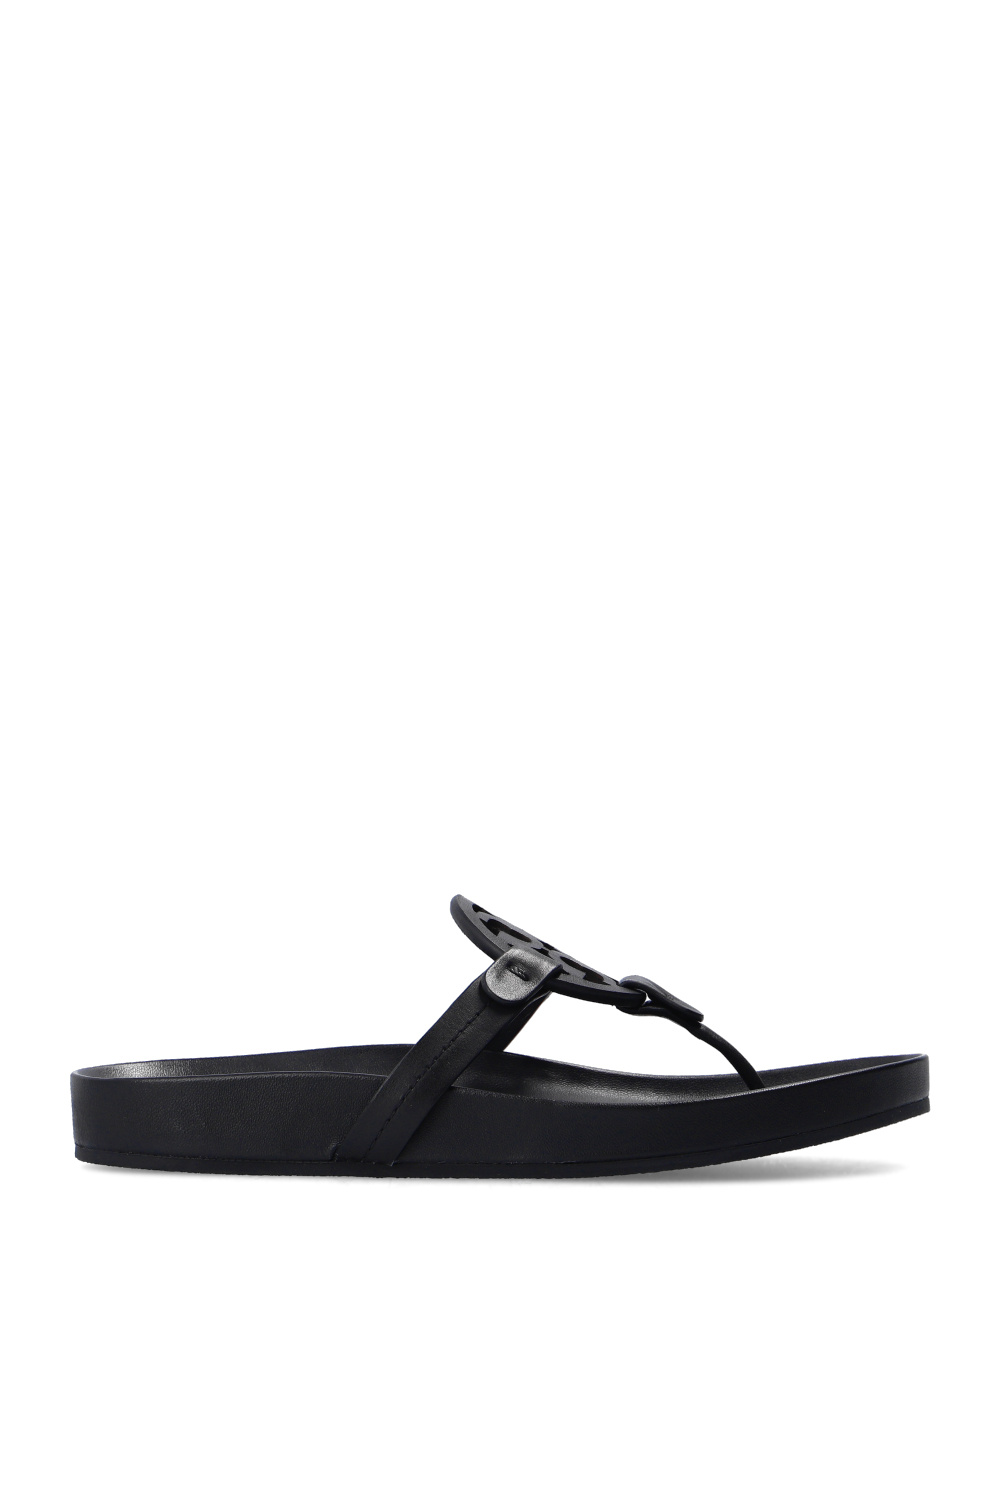 Tory Burch ‘Miller Cloud’ flip-flops | Women's Shoes | Vitkac